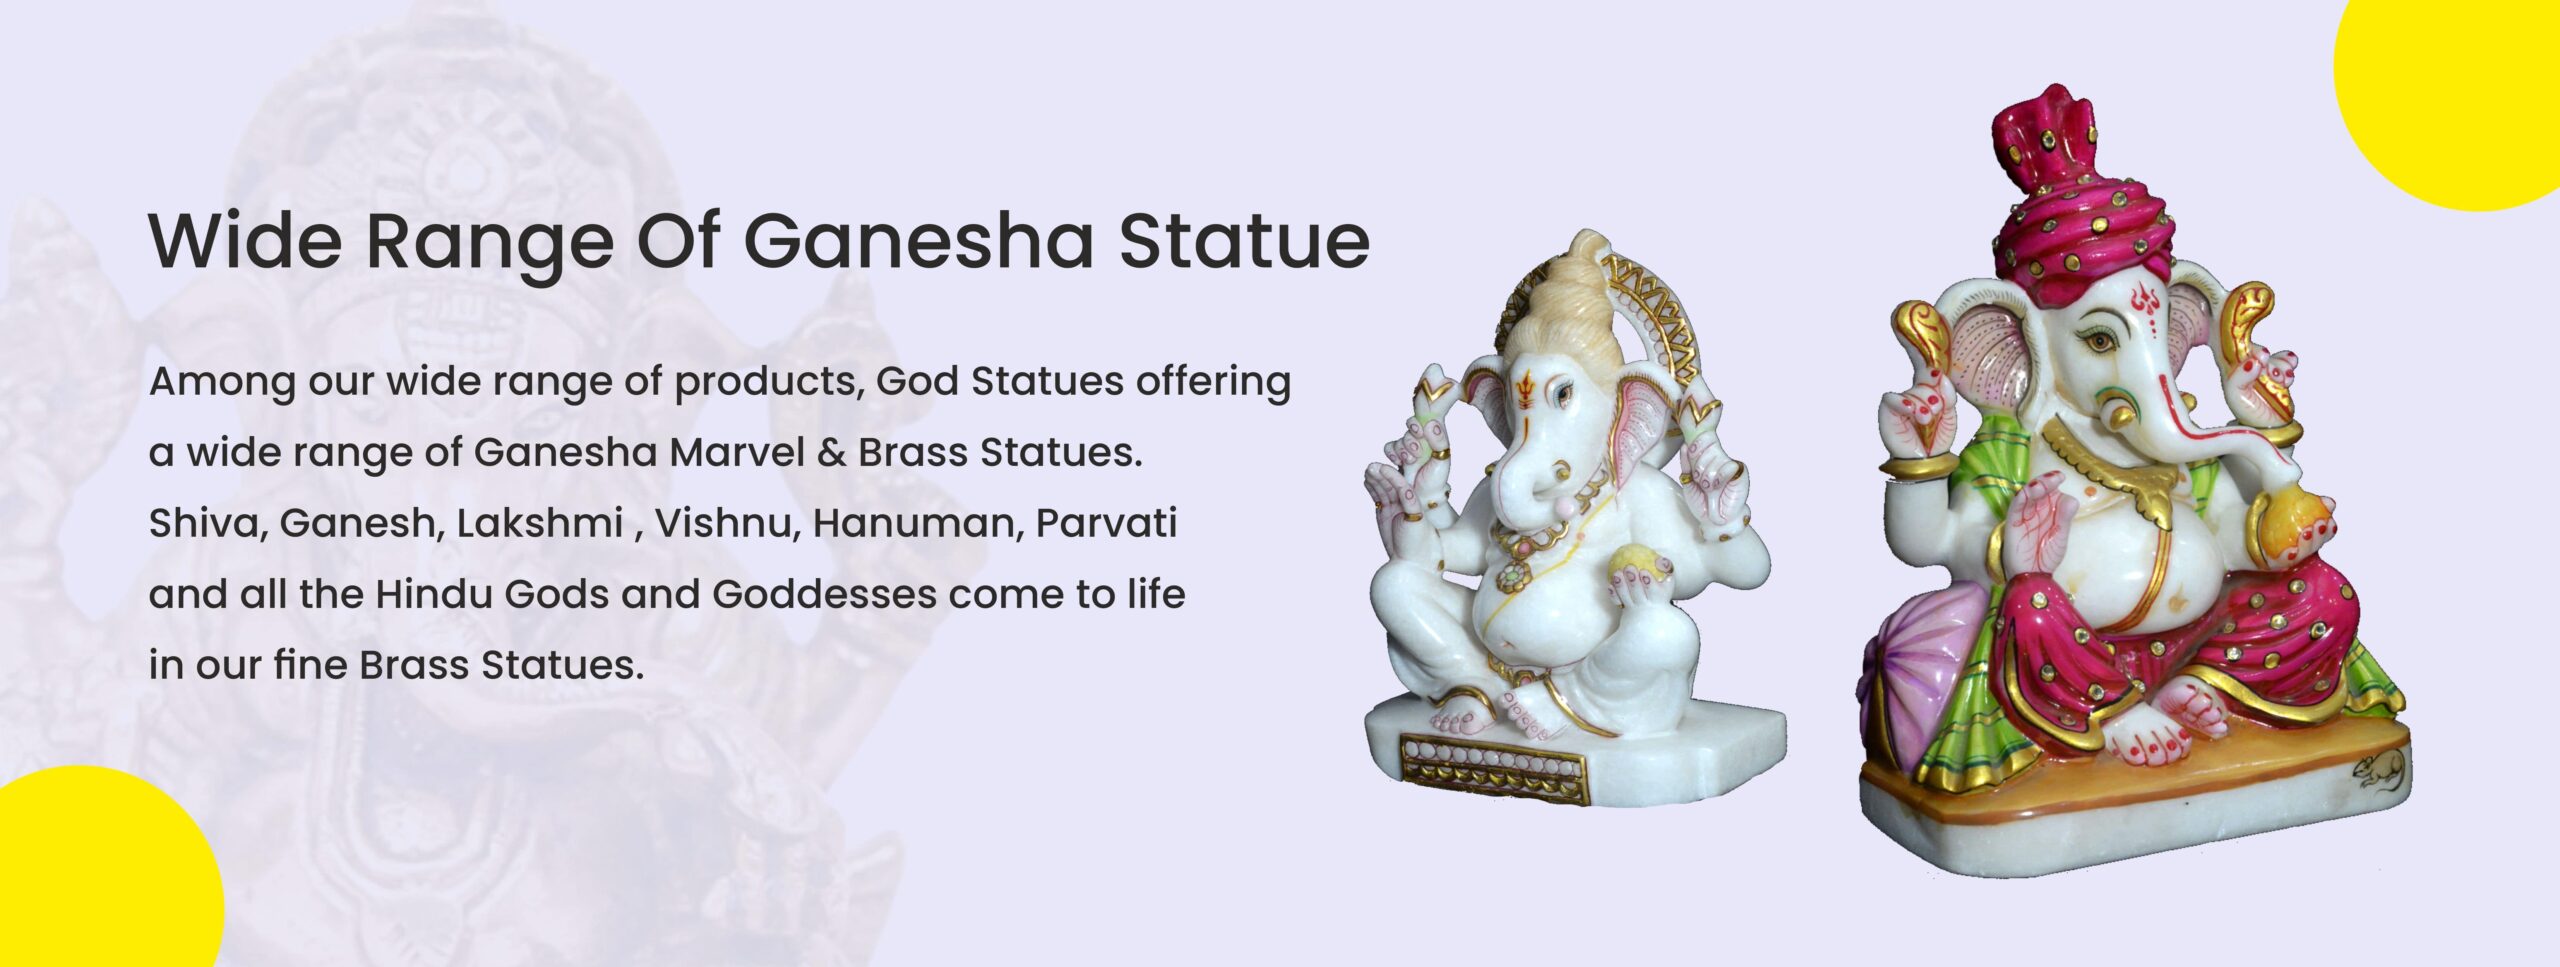 Lord Ganesha Marvel God Statues